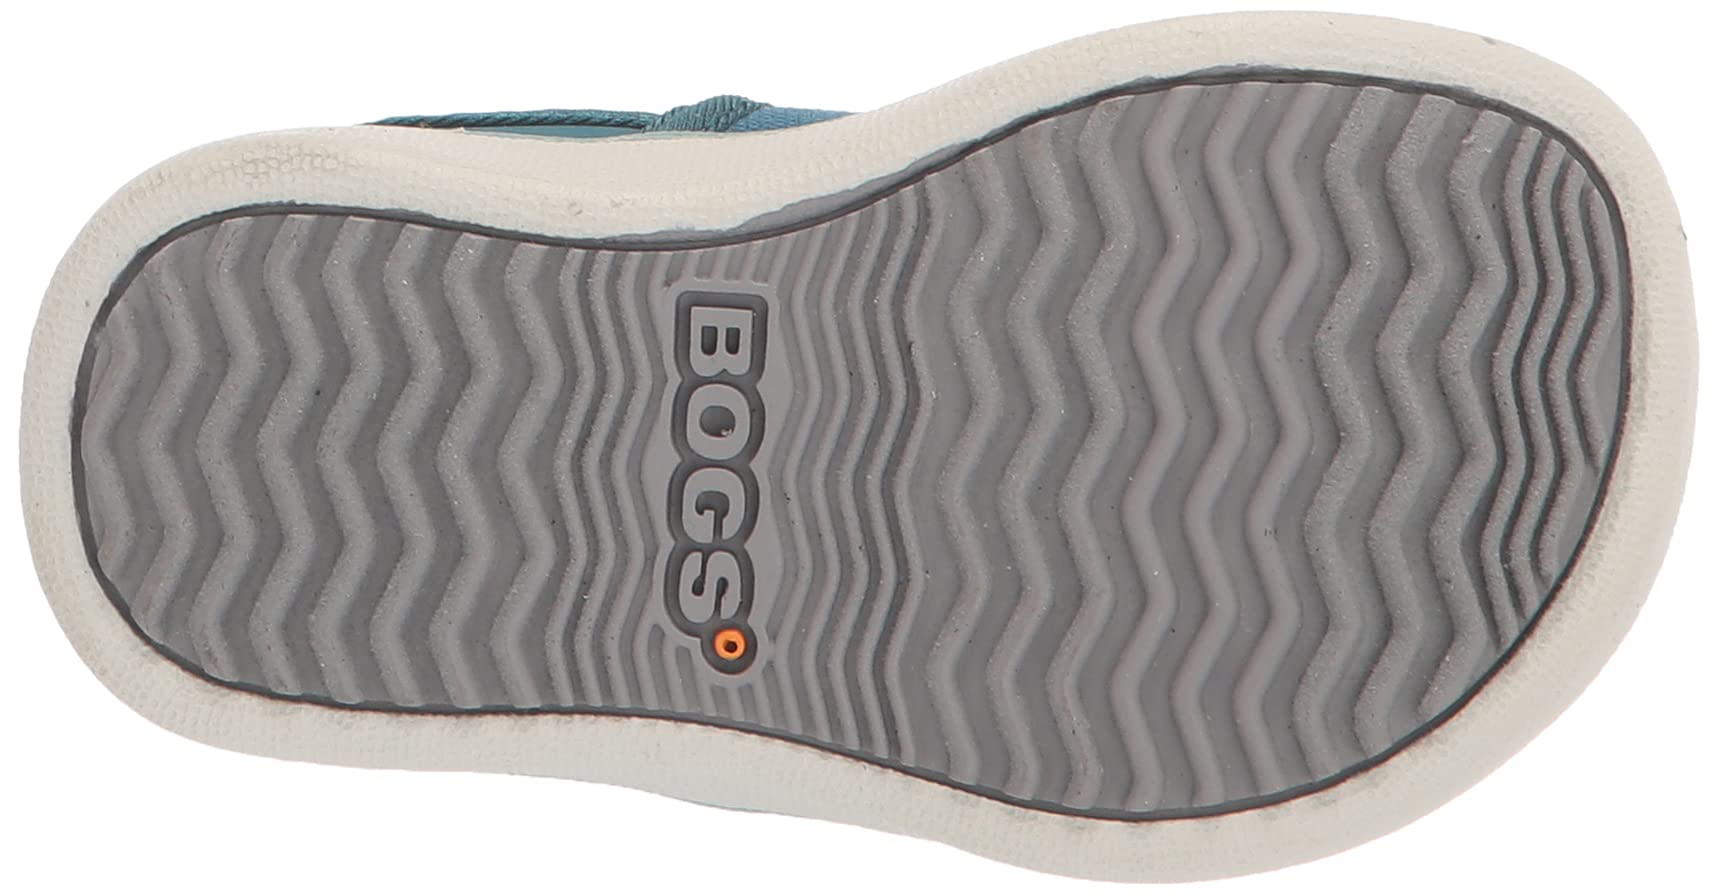 BOGS Unisex-Child Kicker Chelsea Water Resistant Rain Boot